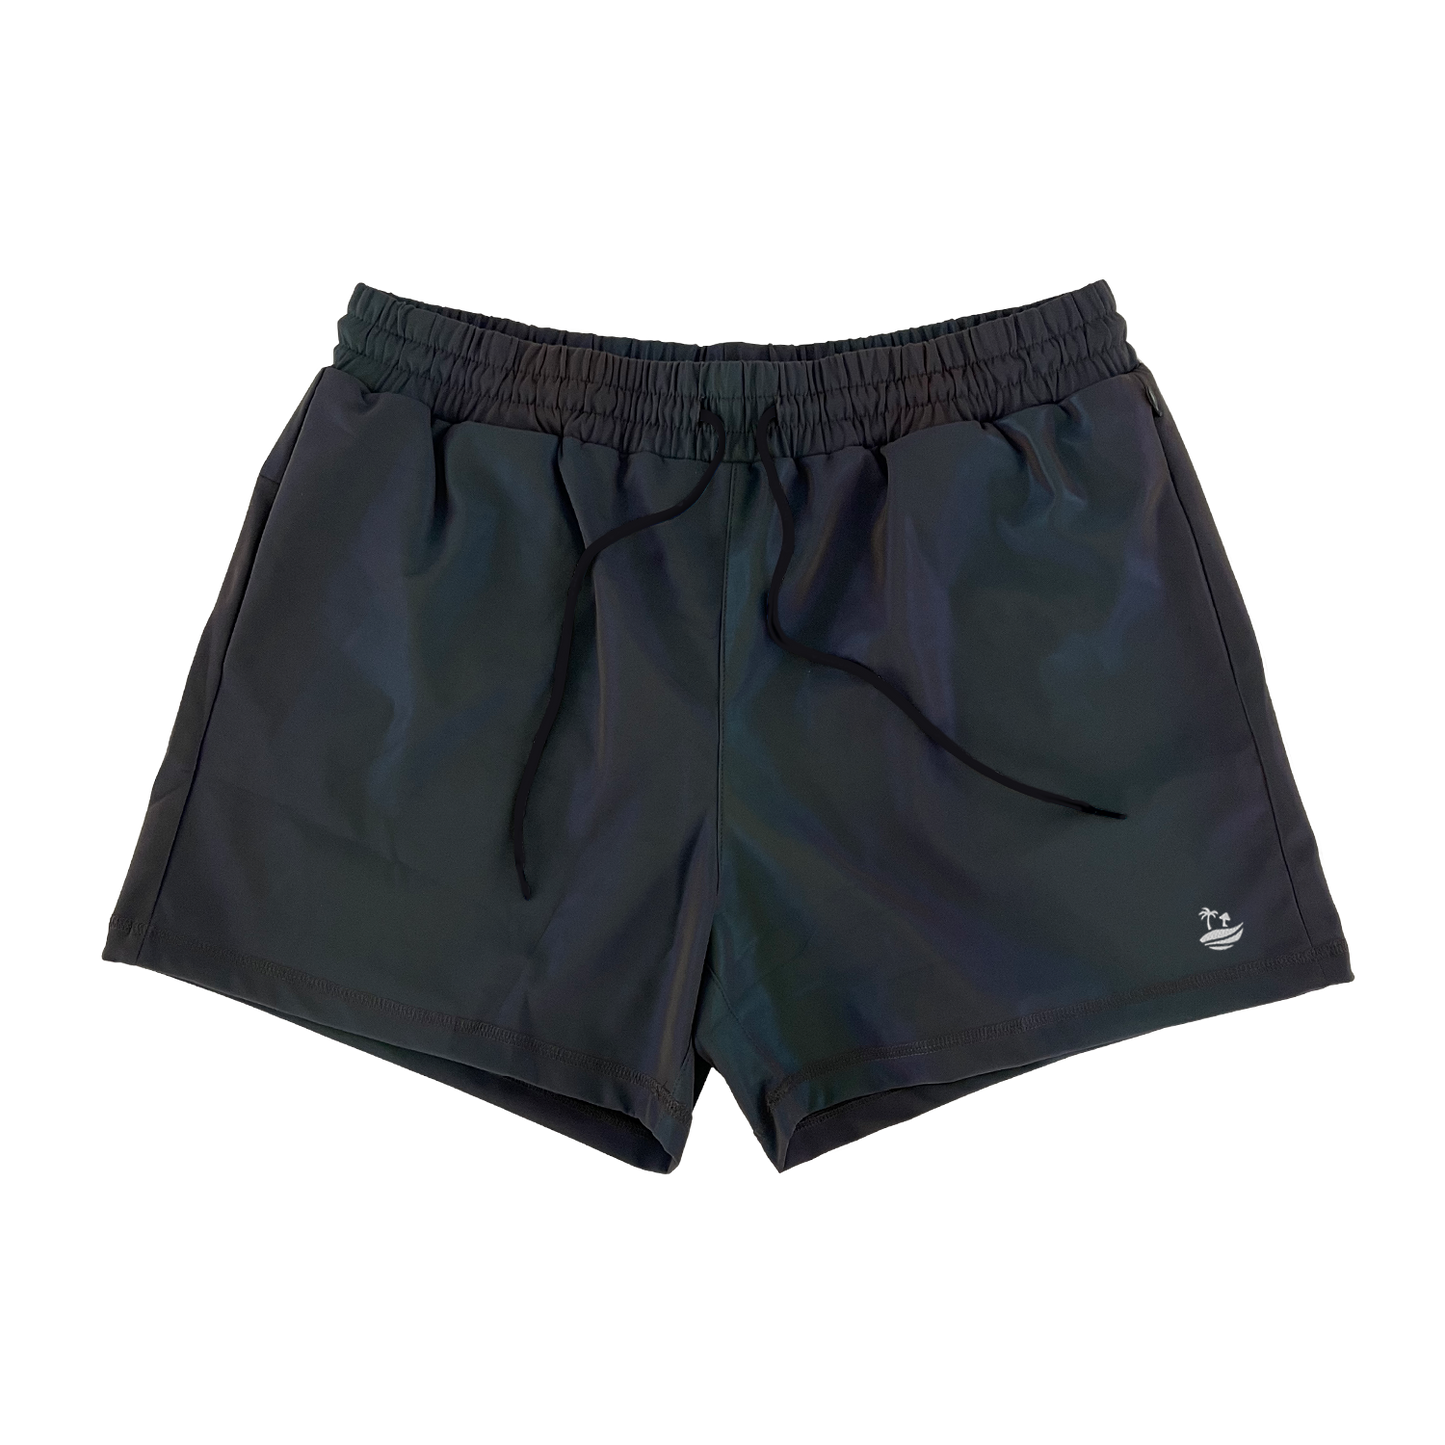 Rainbow Reflective Men's Active Liner Shorts 2.0